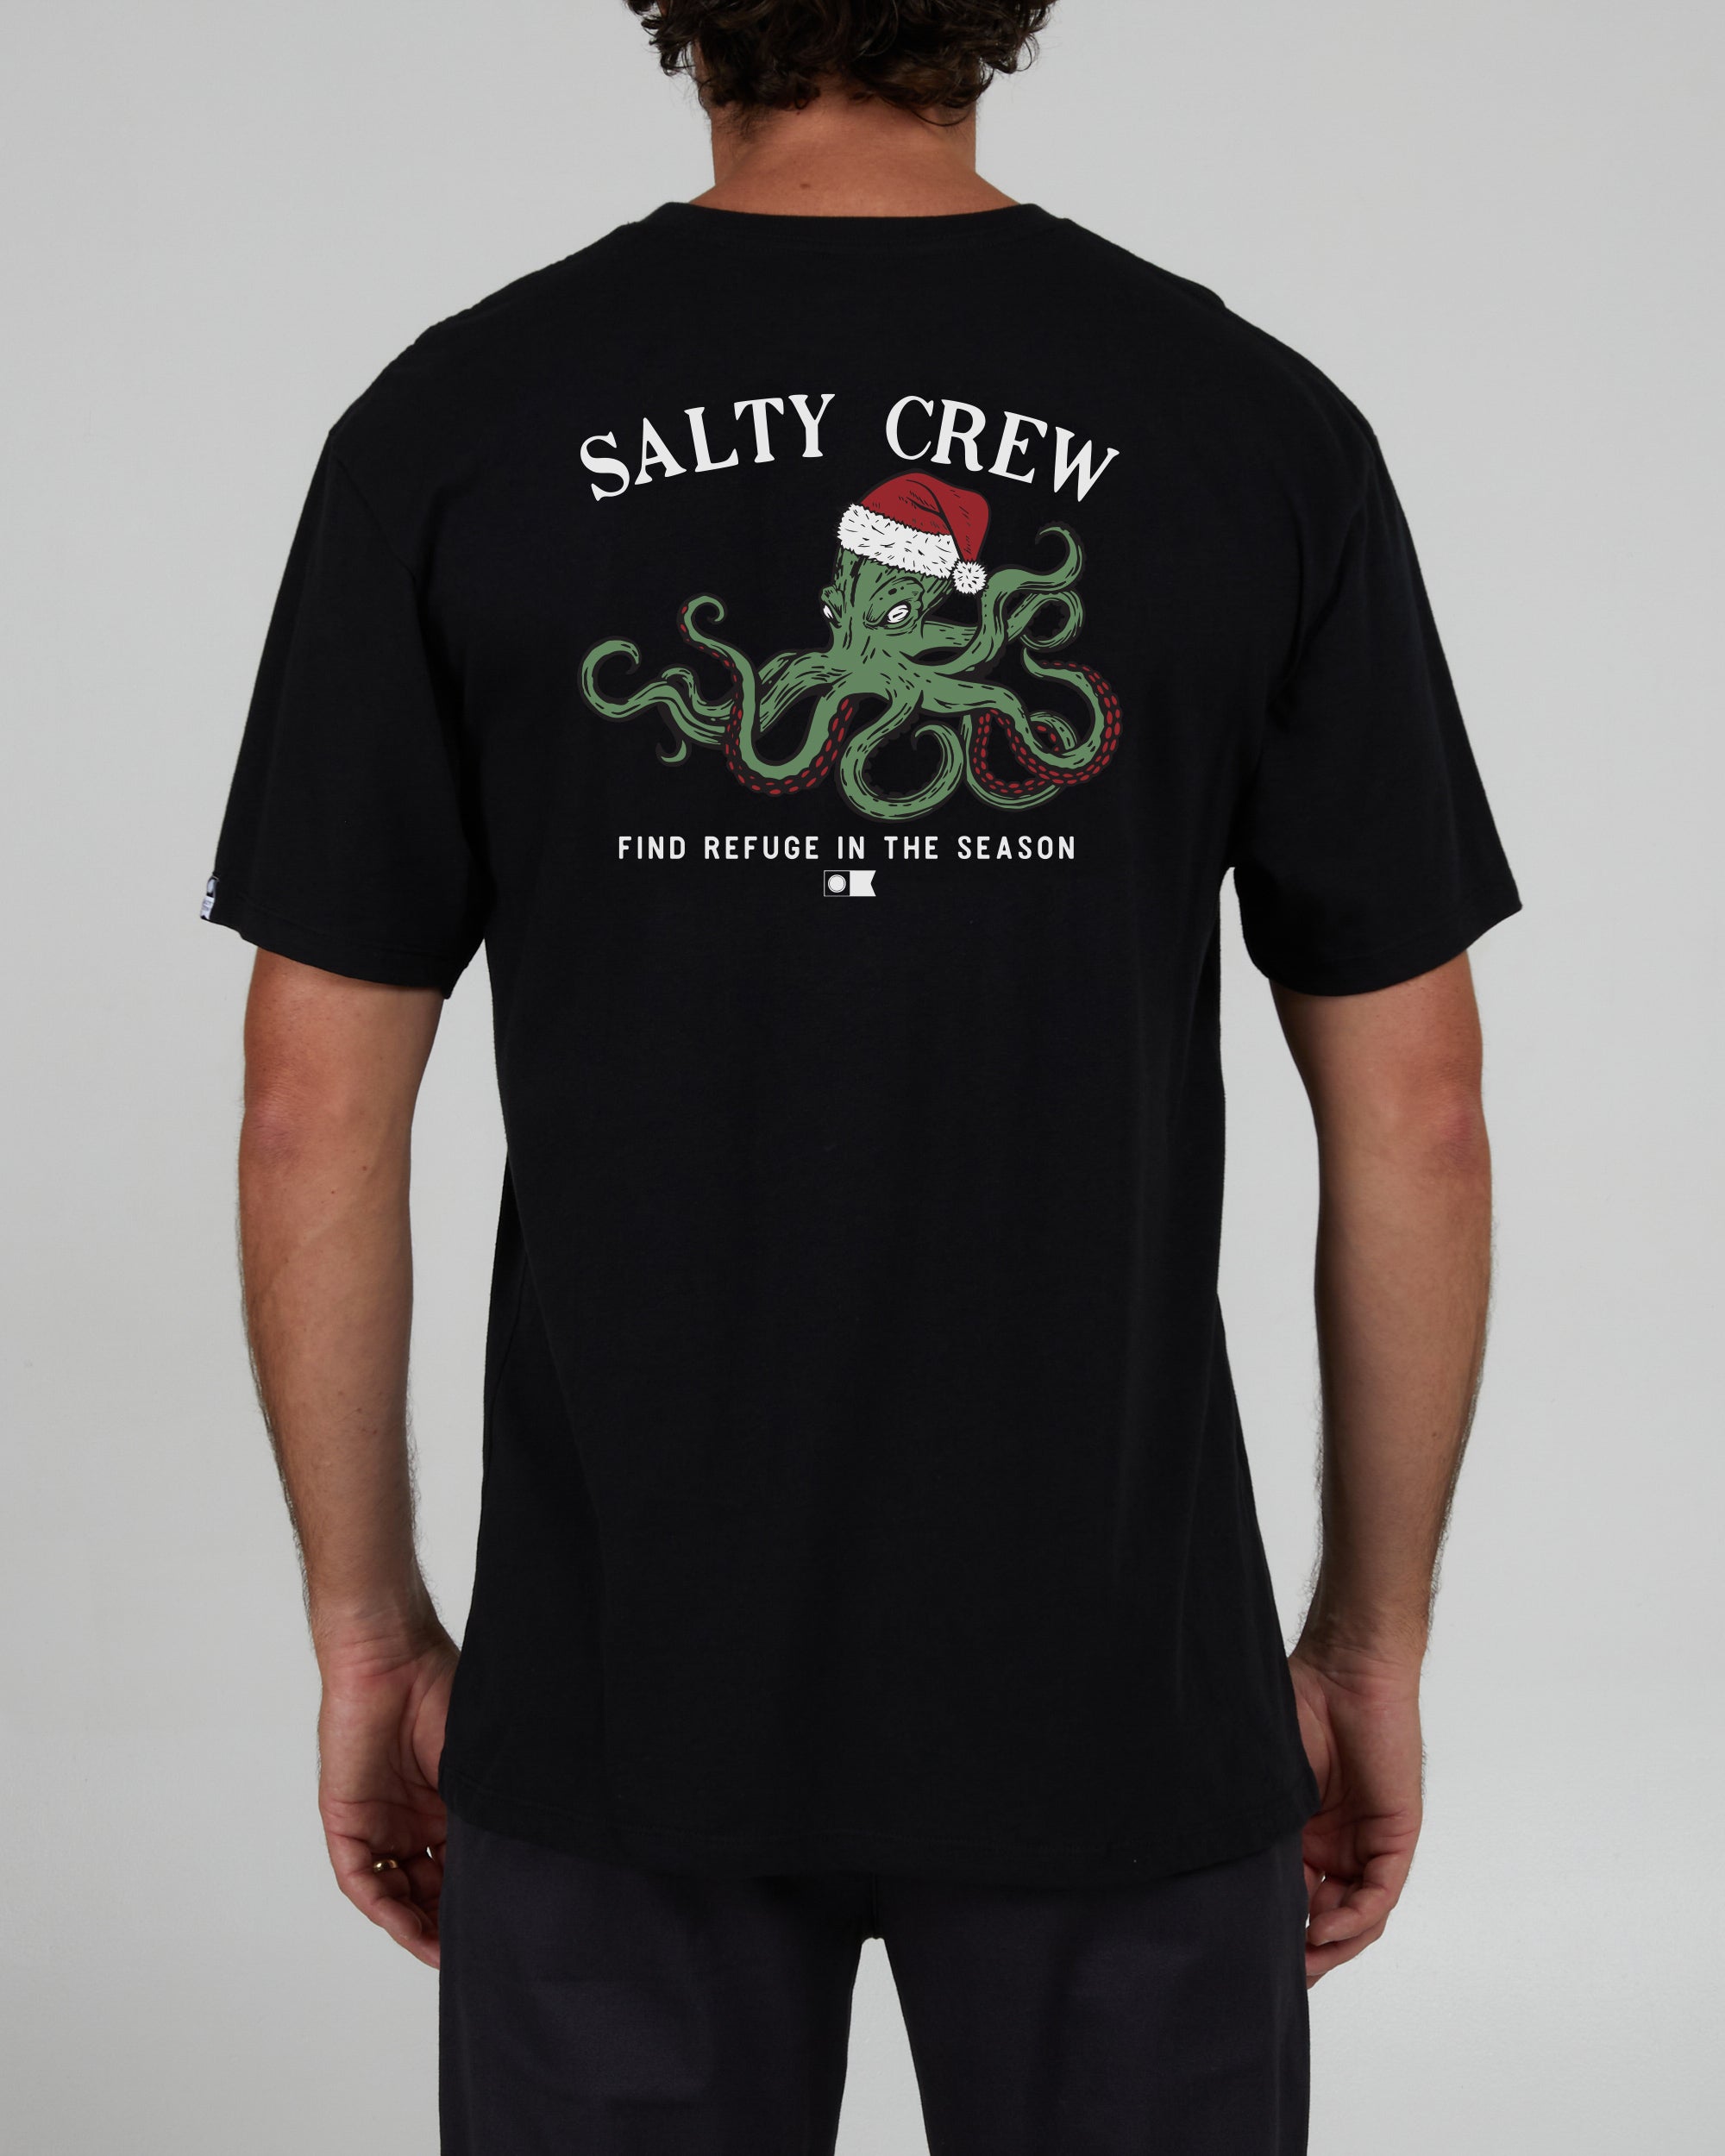 Salty Crew Octomas S/S Tee - Black, Black / M